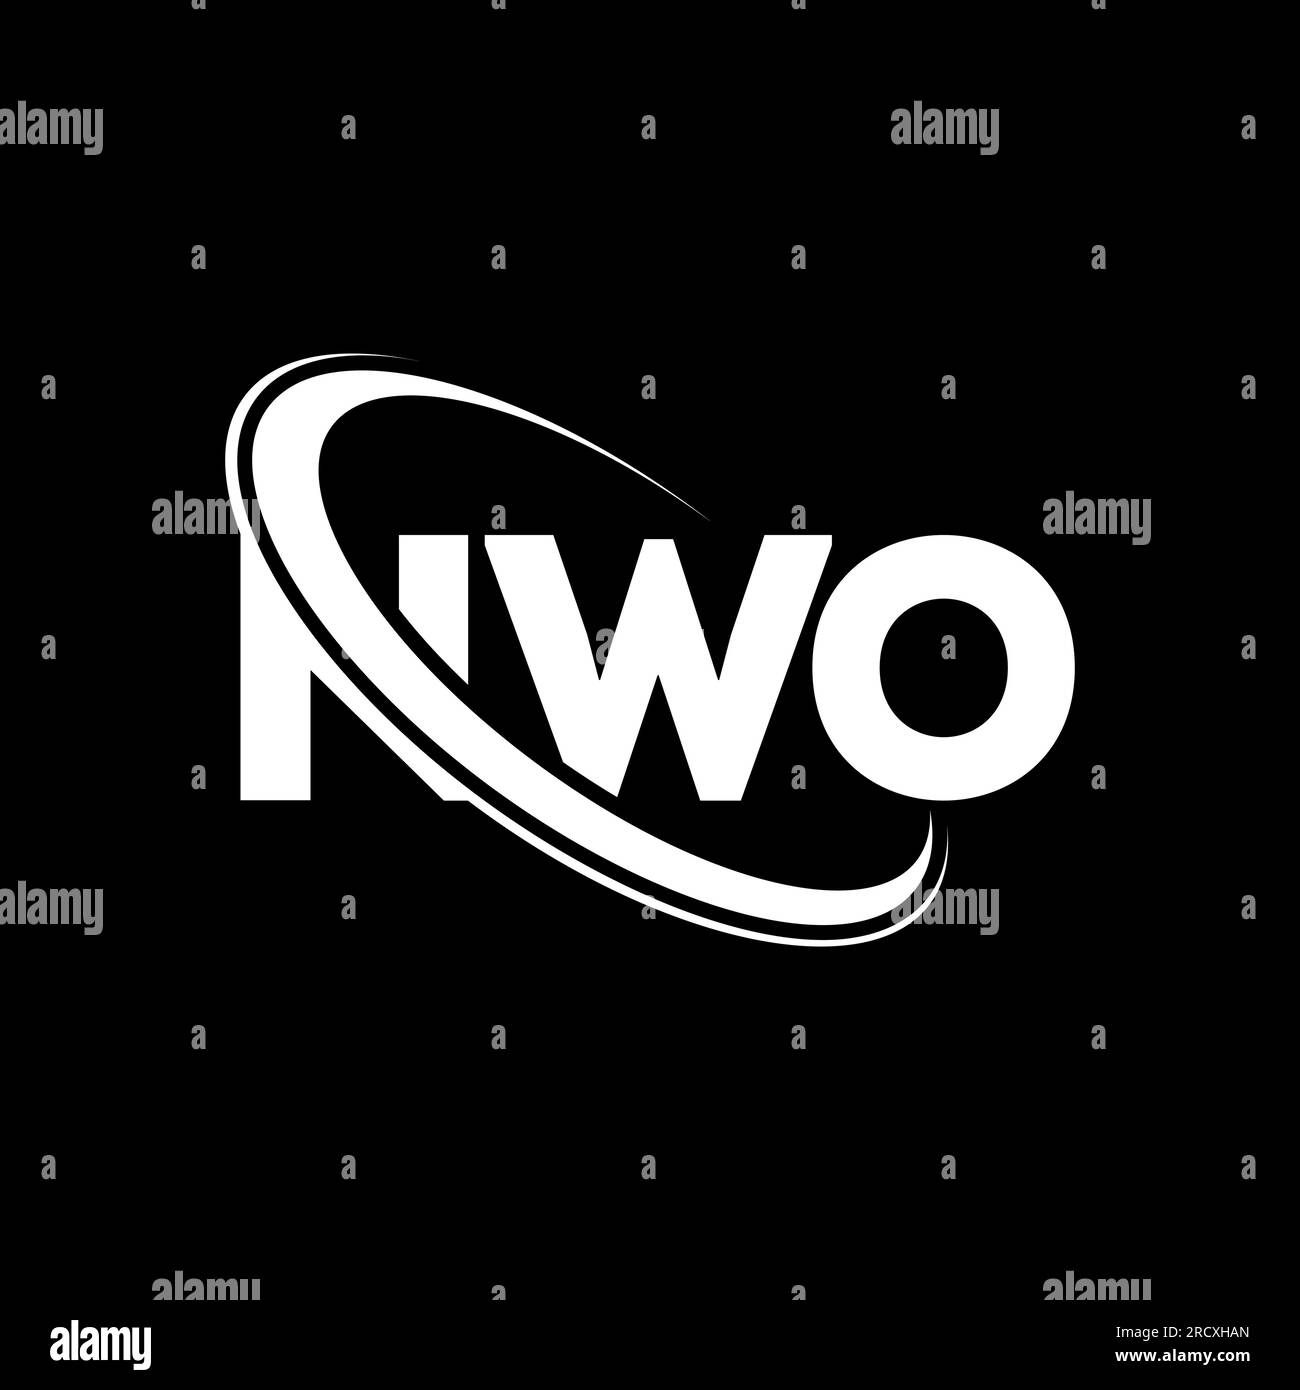 Nwo technology logo hi-res stock photography and images - Alamy